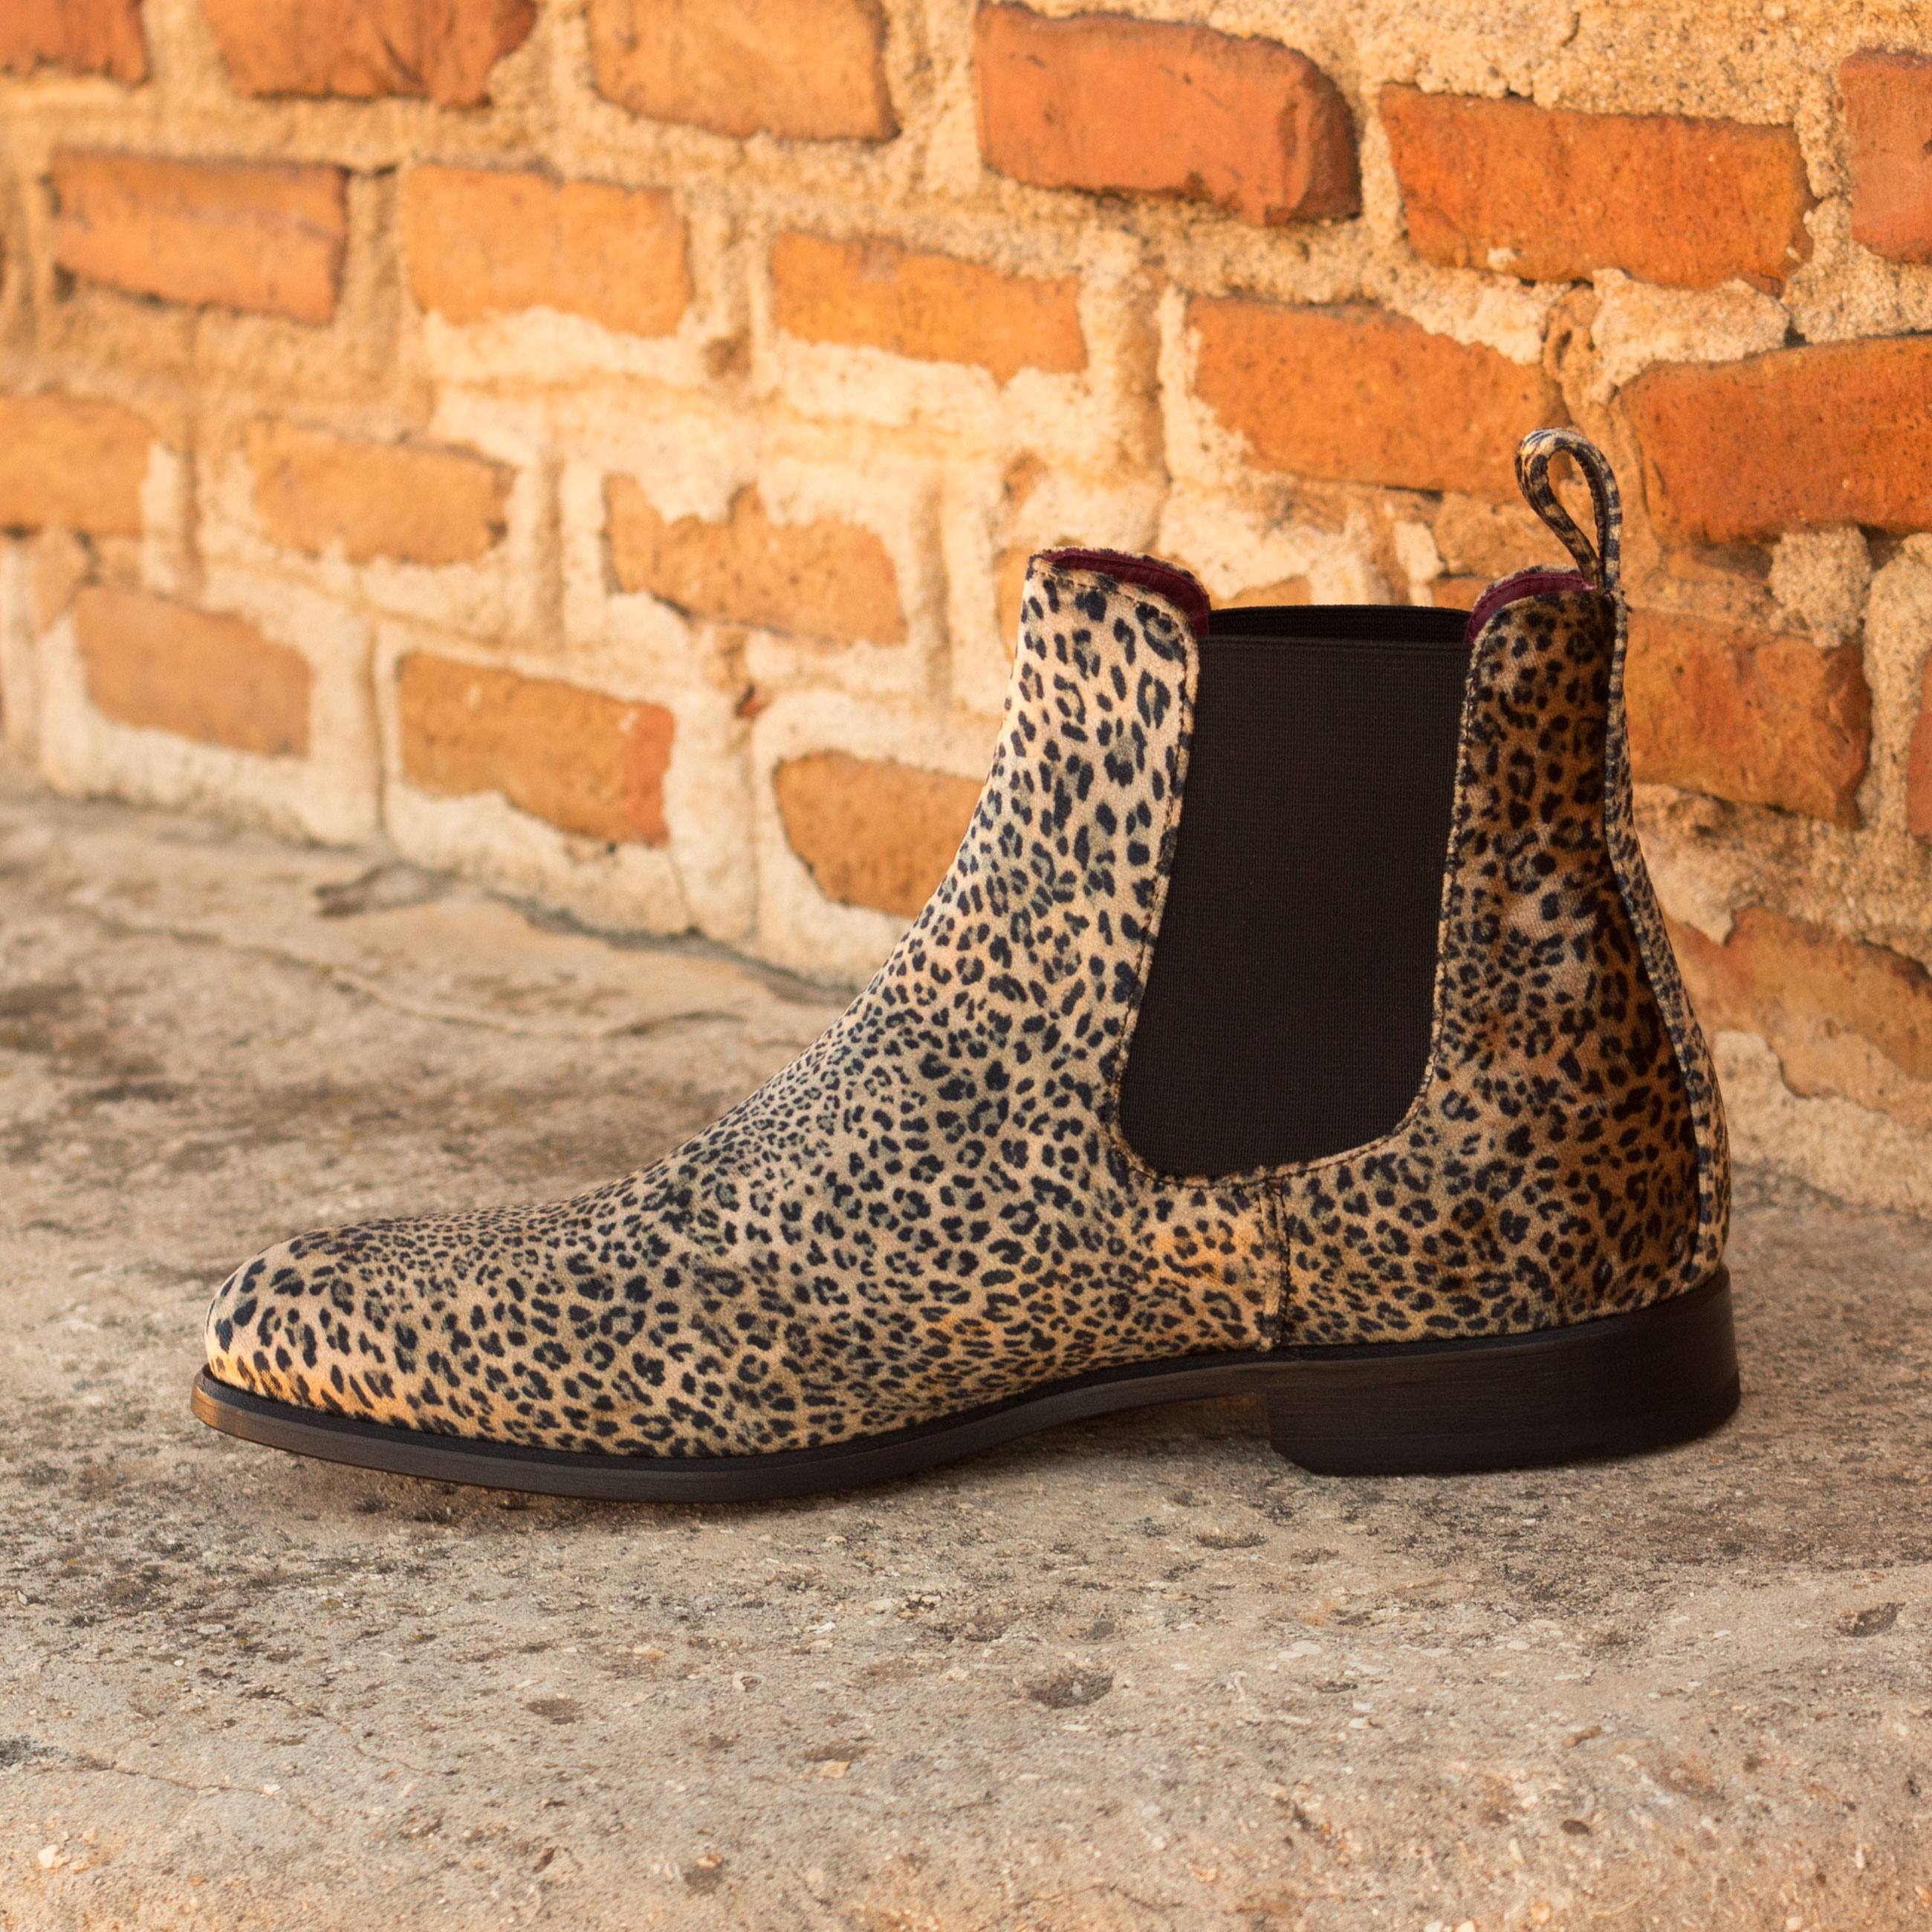 mens cheetah print chelsea boots